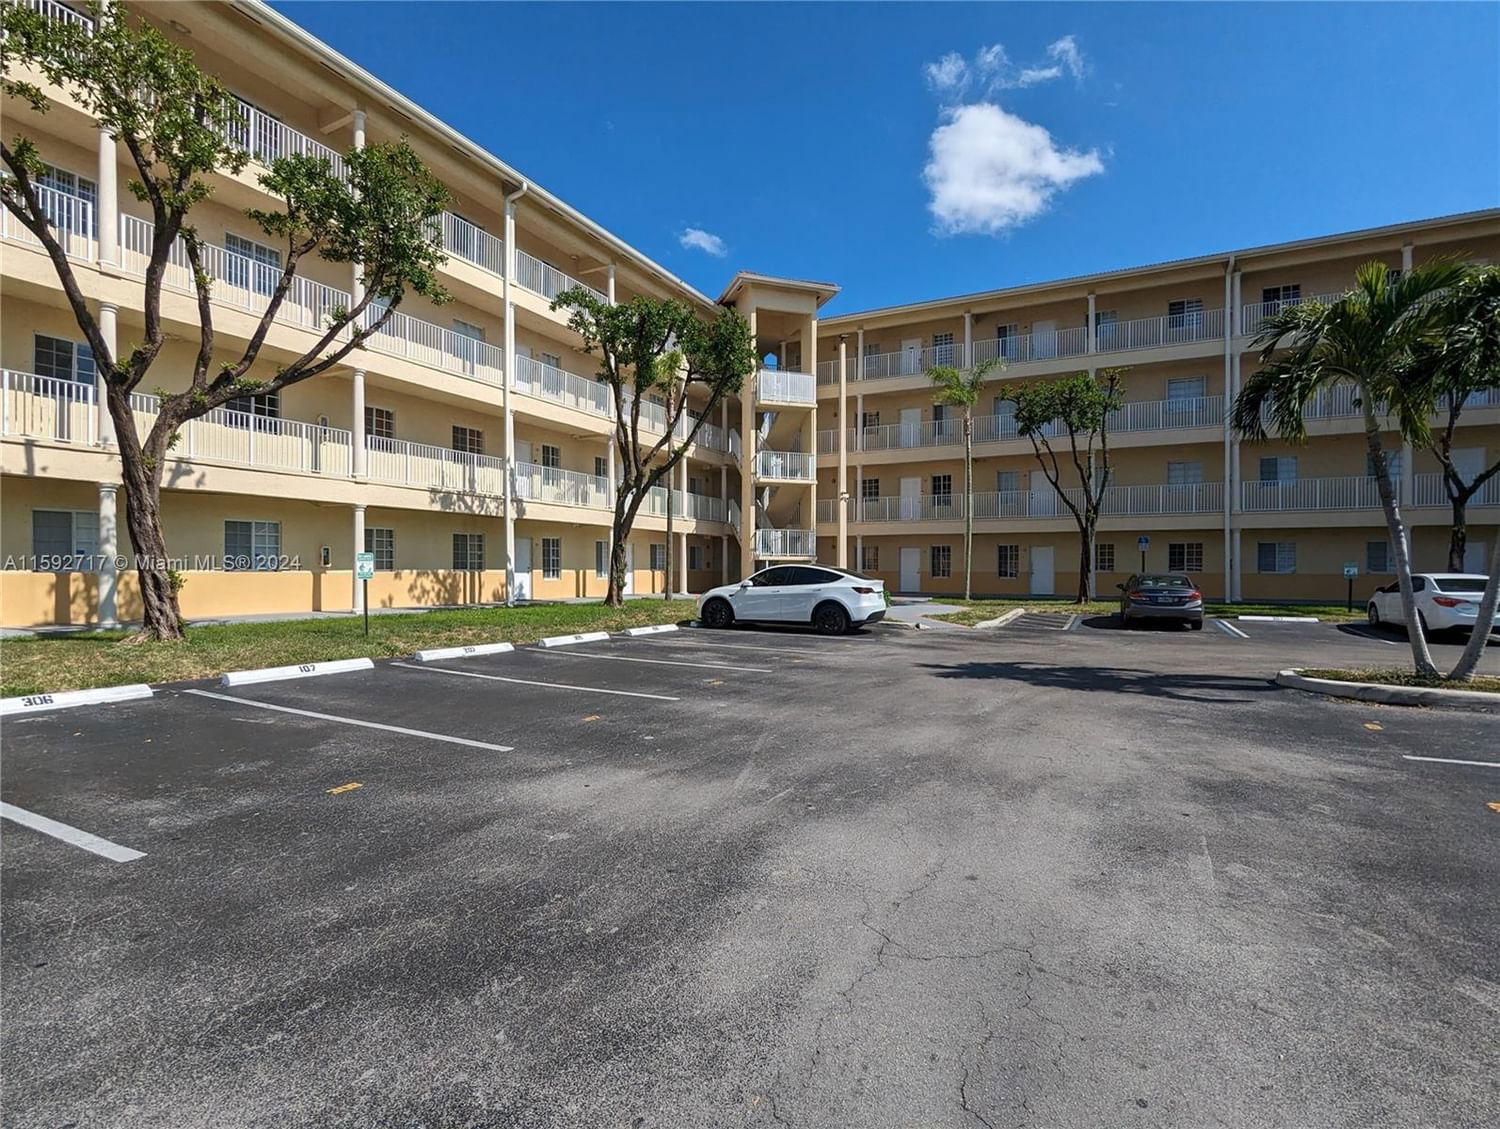 Real estate property located at 6940 179th St #108-7, Miami-Dade County, SAN MARCO VILLAS CONDO, Hialeah, FL